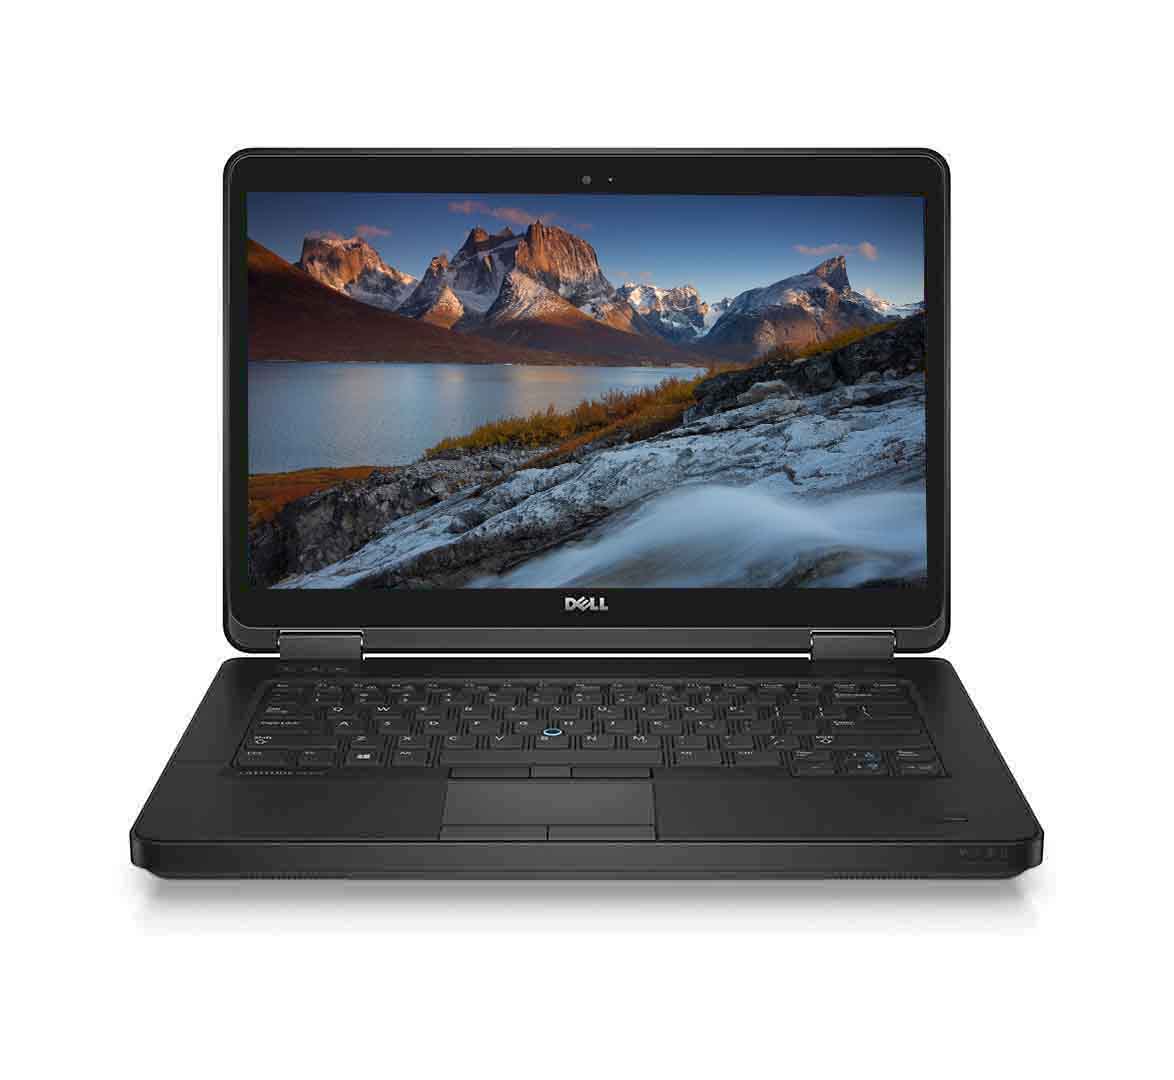 Dell Latitude E5440 Business Laptop, Intel Core i3-4th Generation CPU, 8GB RAM, 256GB SSD, 14 inch Display, Win 10 Pro